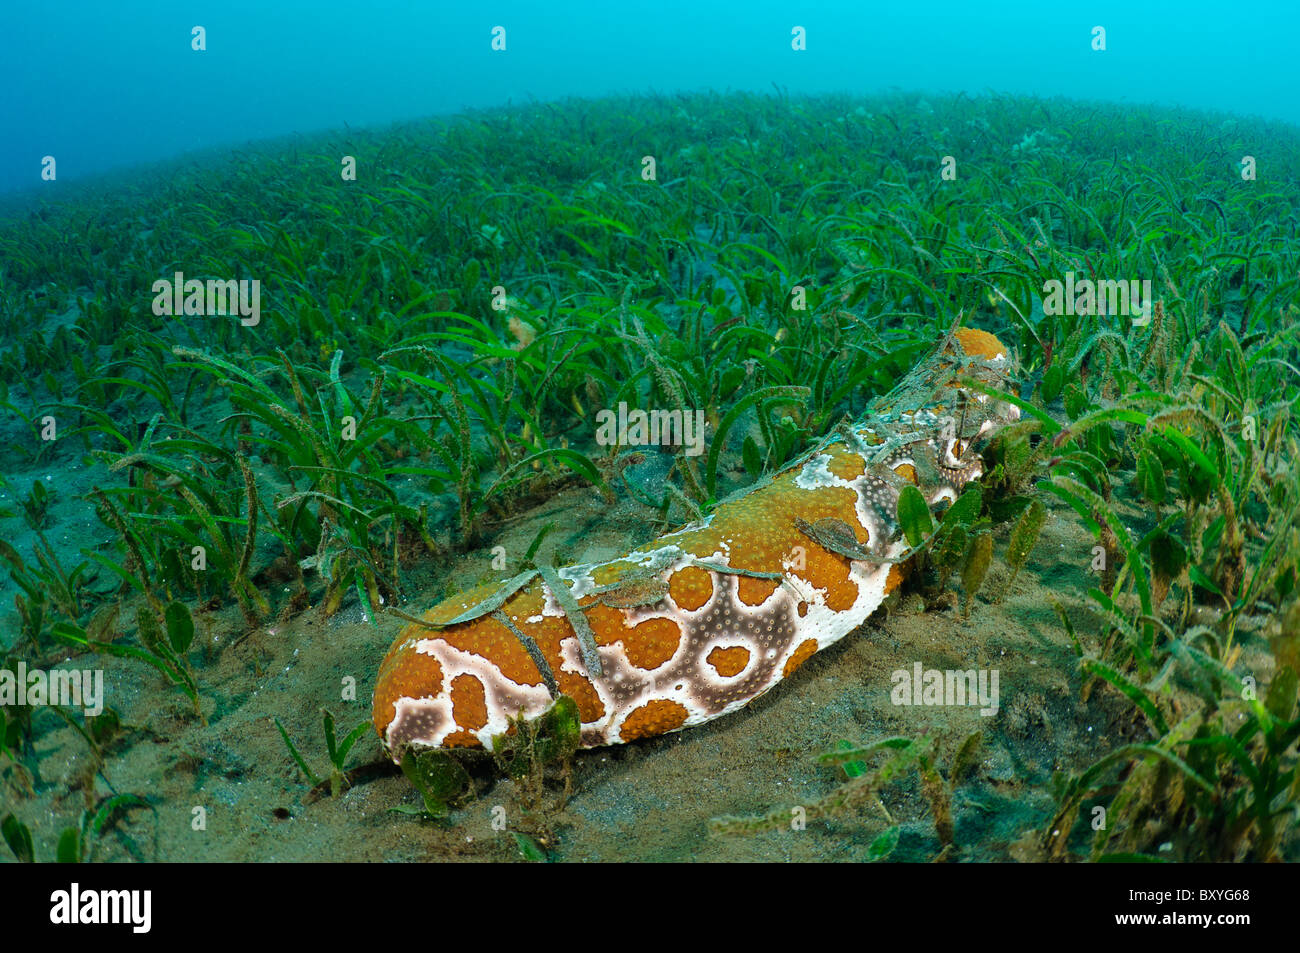 Eyed sea cucumber in eel grass, Manado, Sulawesi, Indonesia. Stock Photo